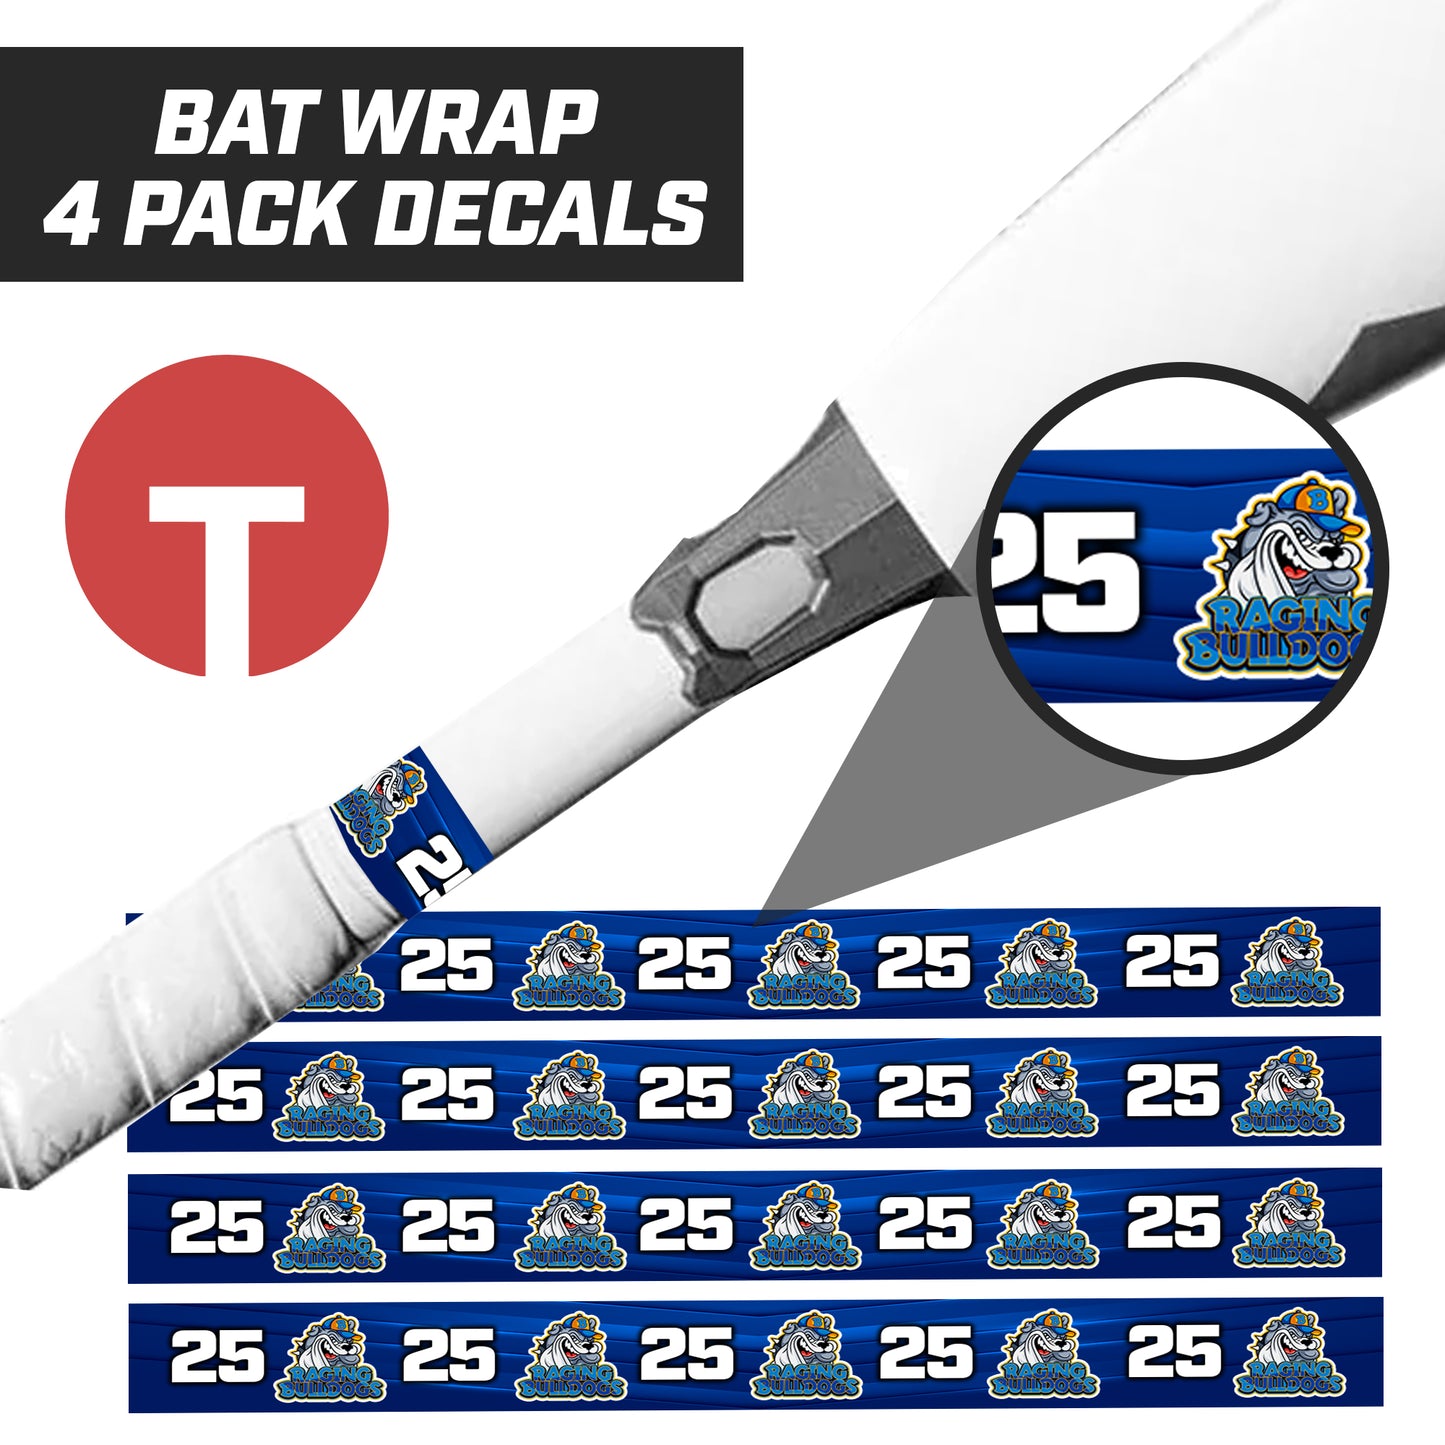 Raging Bulldogs - Bat Decal Wraps (4 Pack)